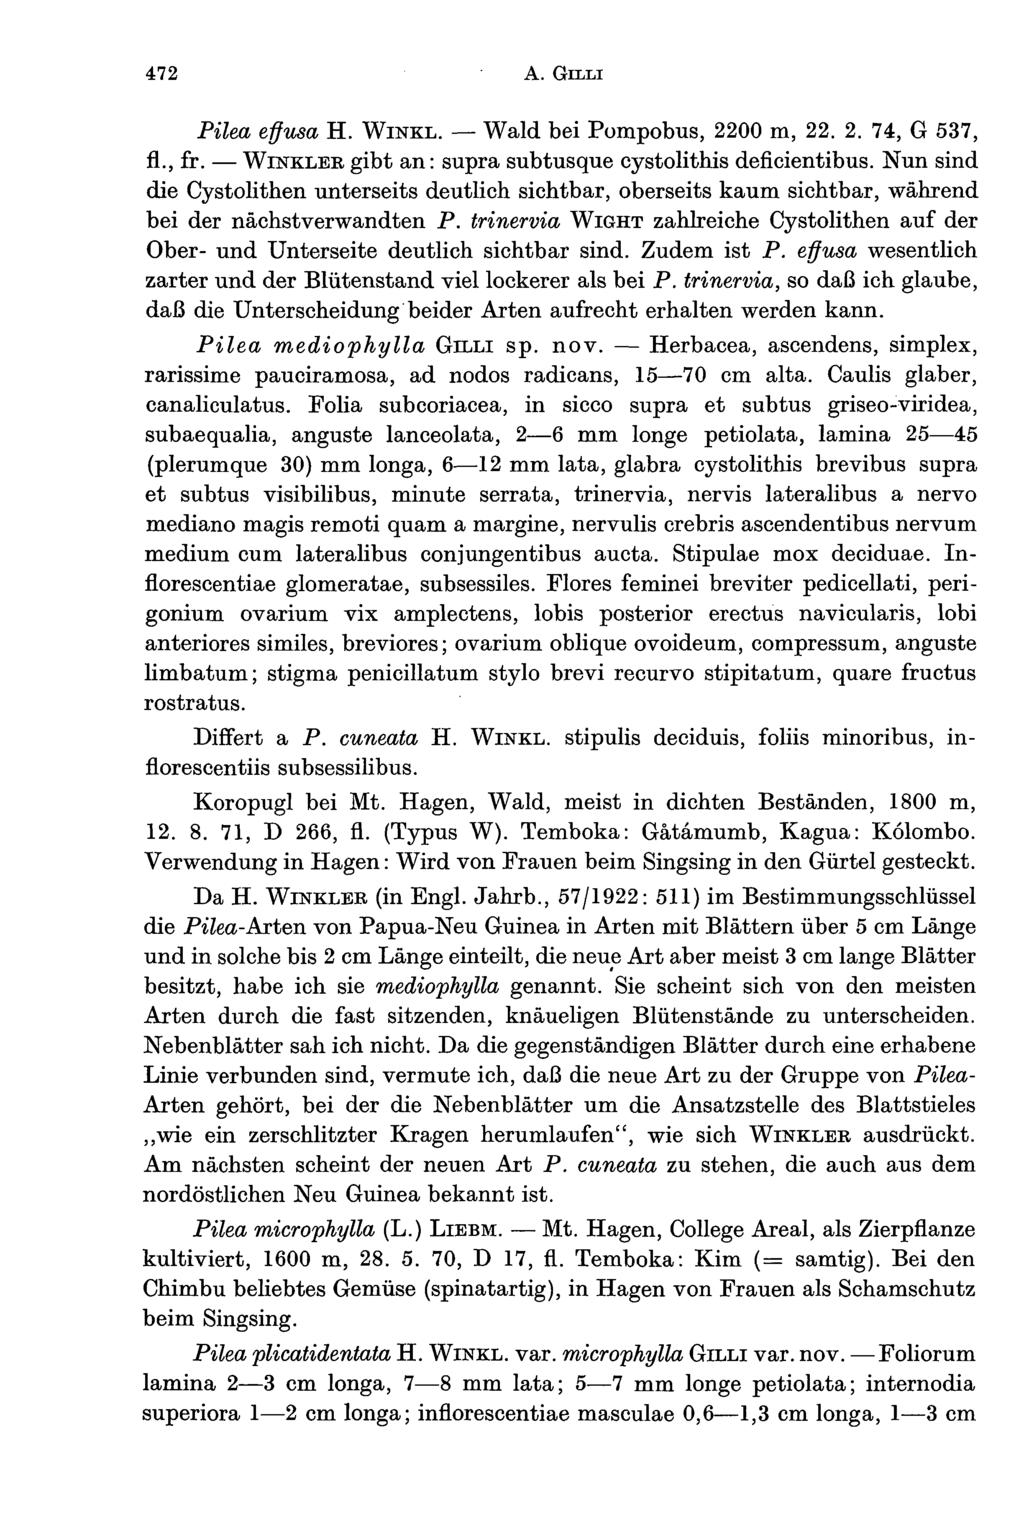 472 A. Pilea effusa H. WINKL. Wald bei Pompobus, 2200 m, 22. 2. 74, G 537, fi., fr. WINKLEK. gibt an: supra subtusque cystolithis deficientibus.